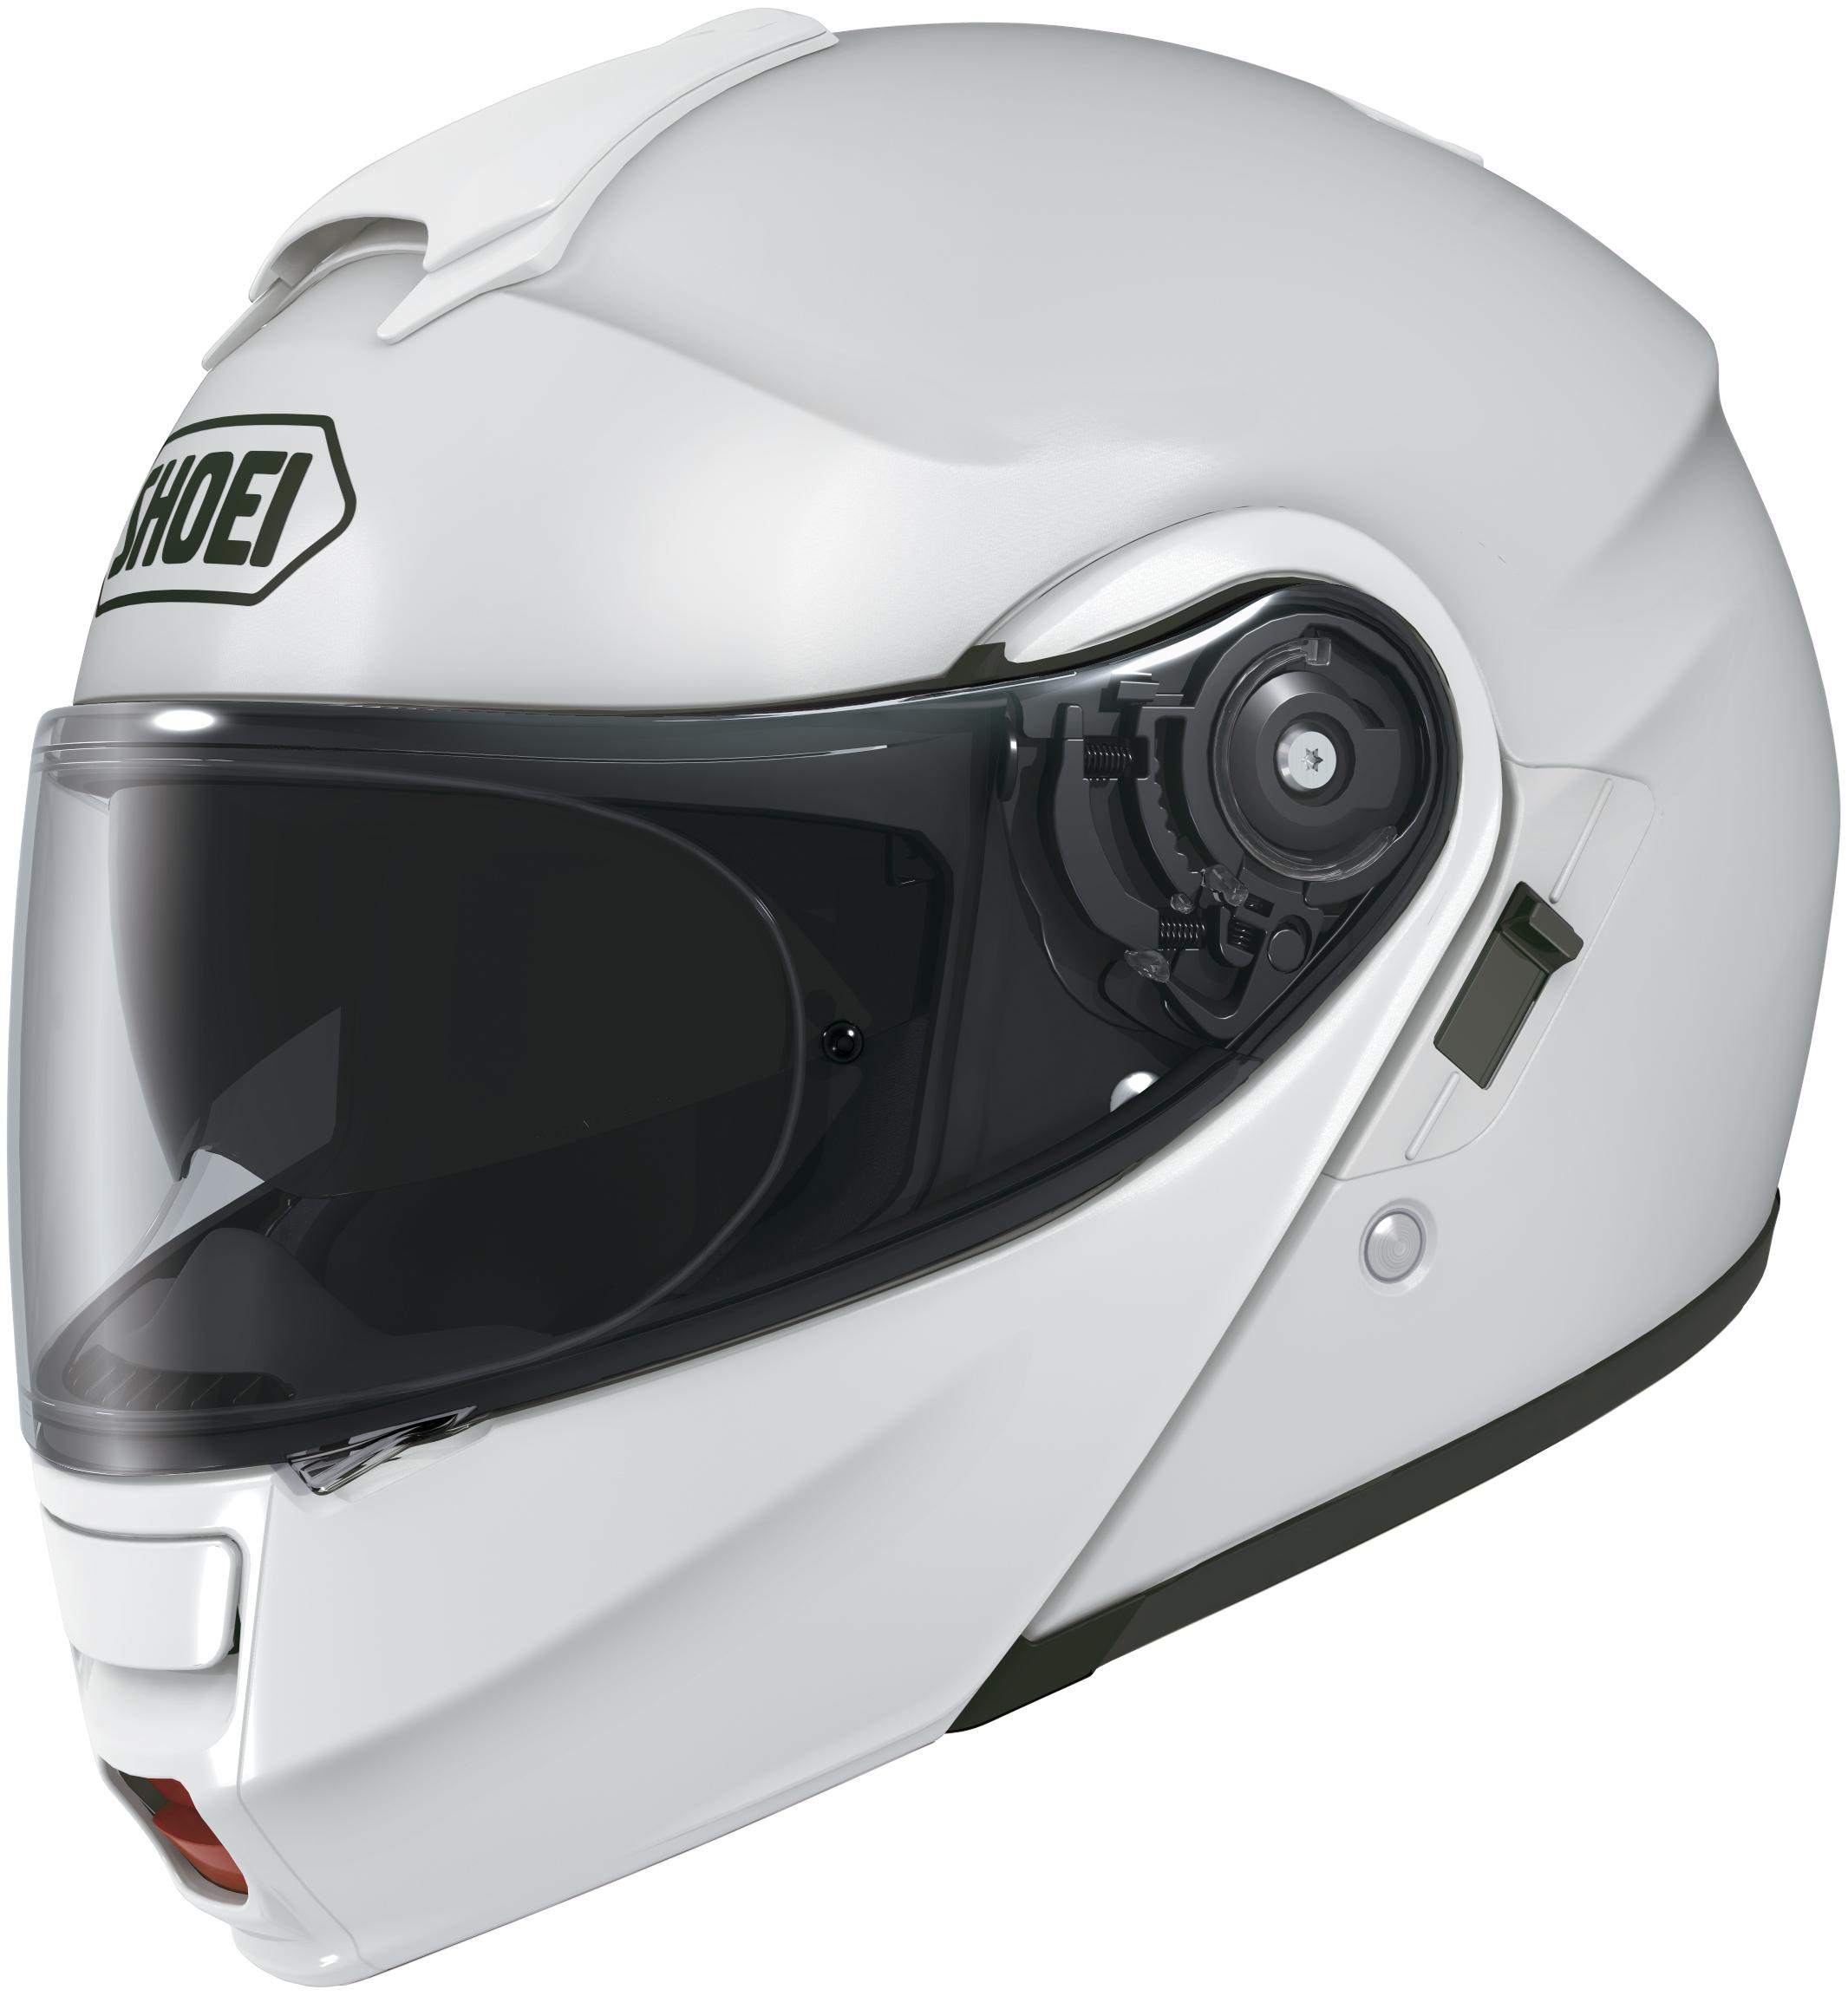 Free 2-day shipping! shoei neotec white modular helmet 2013 motorcycle full face